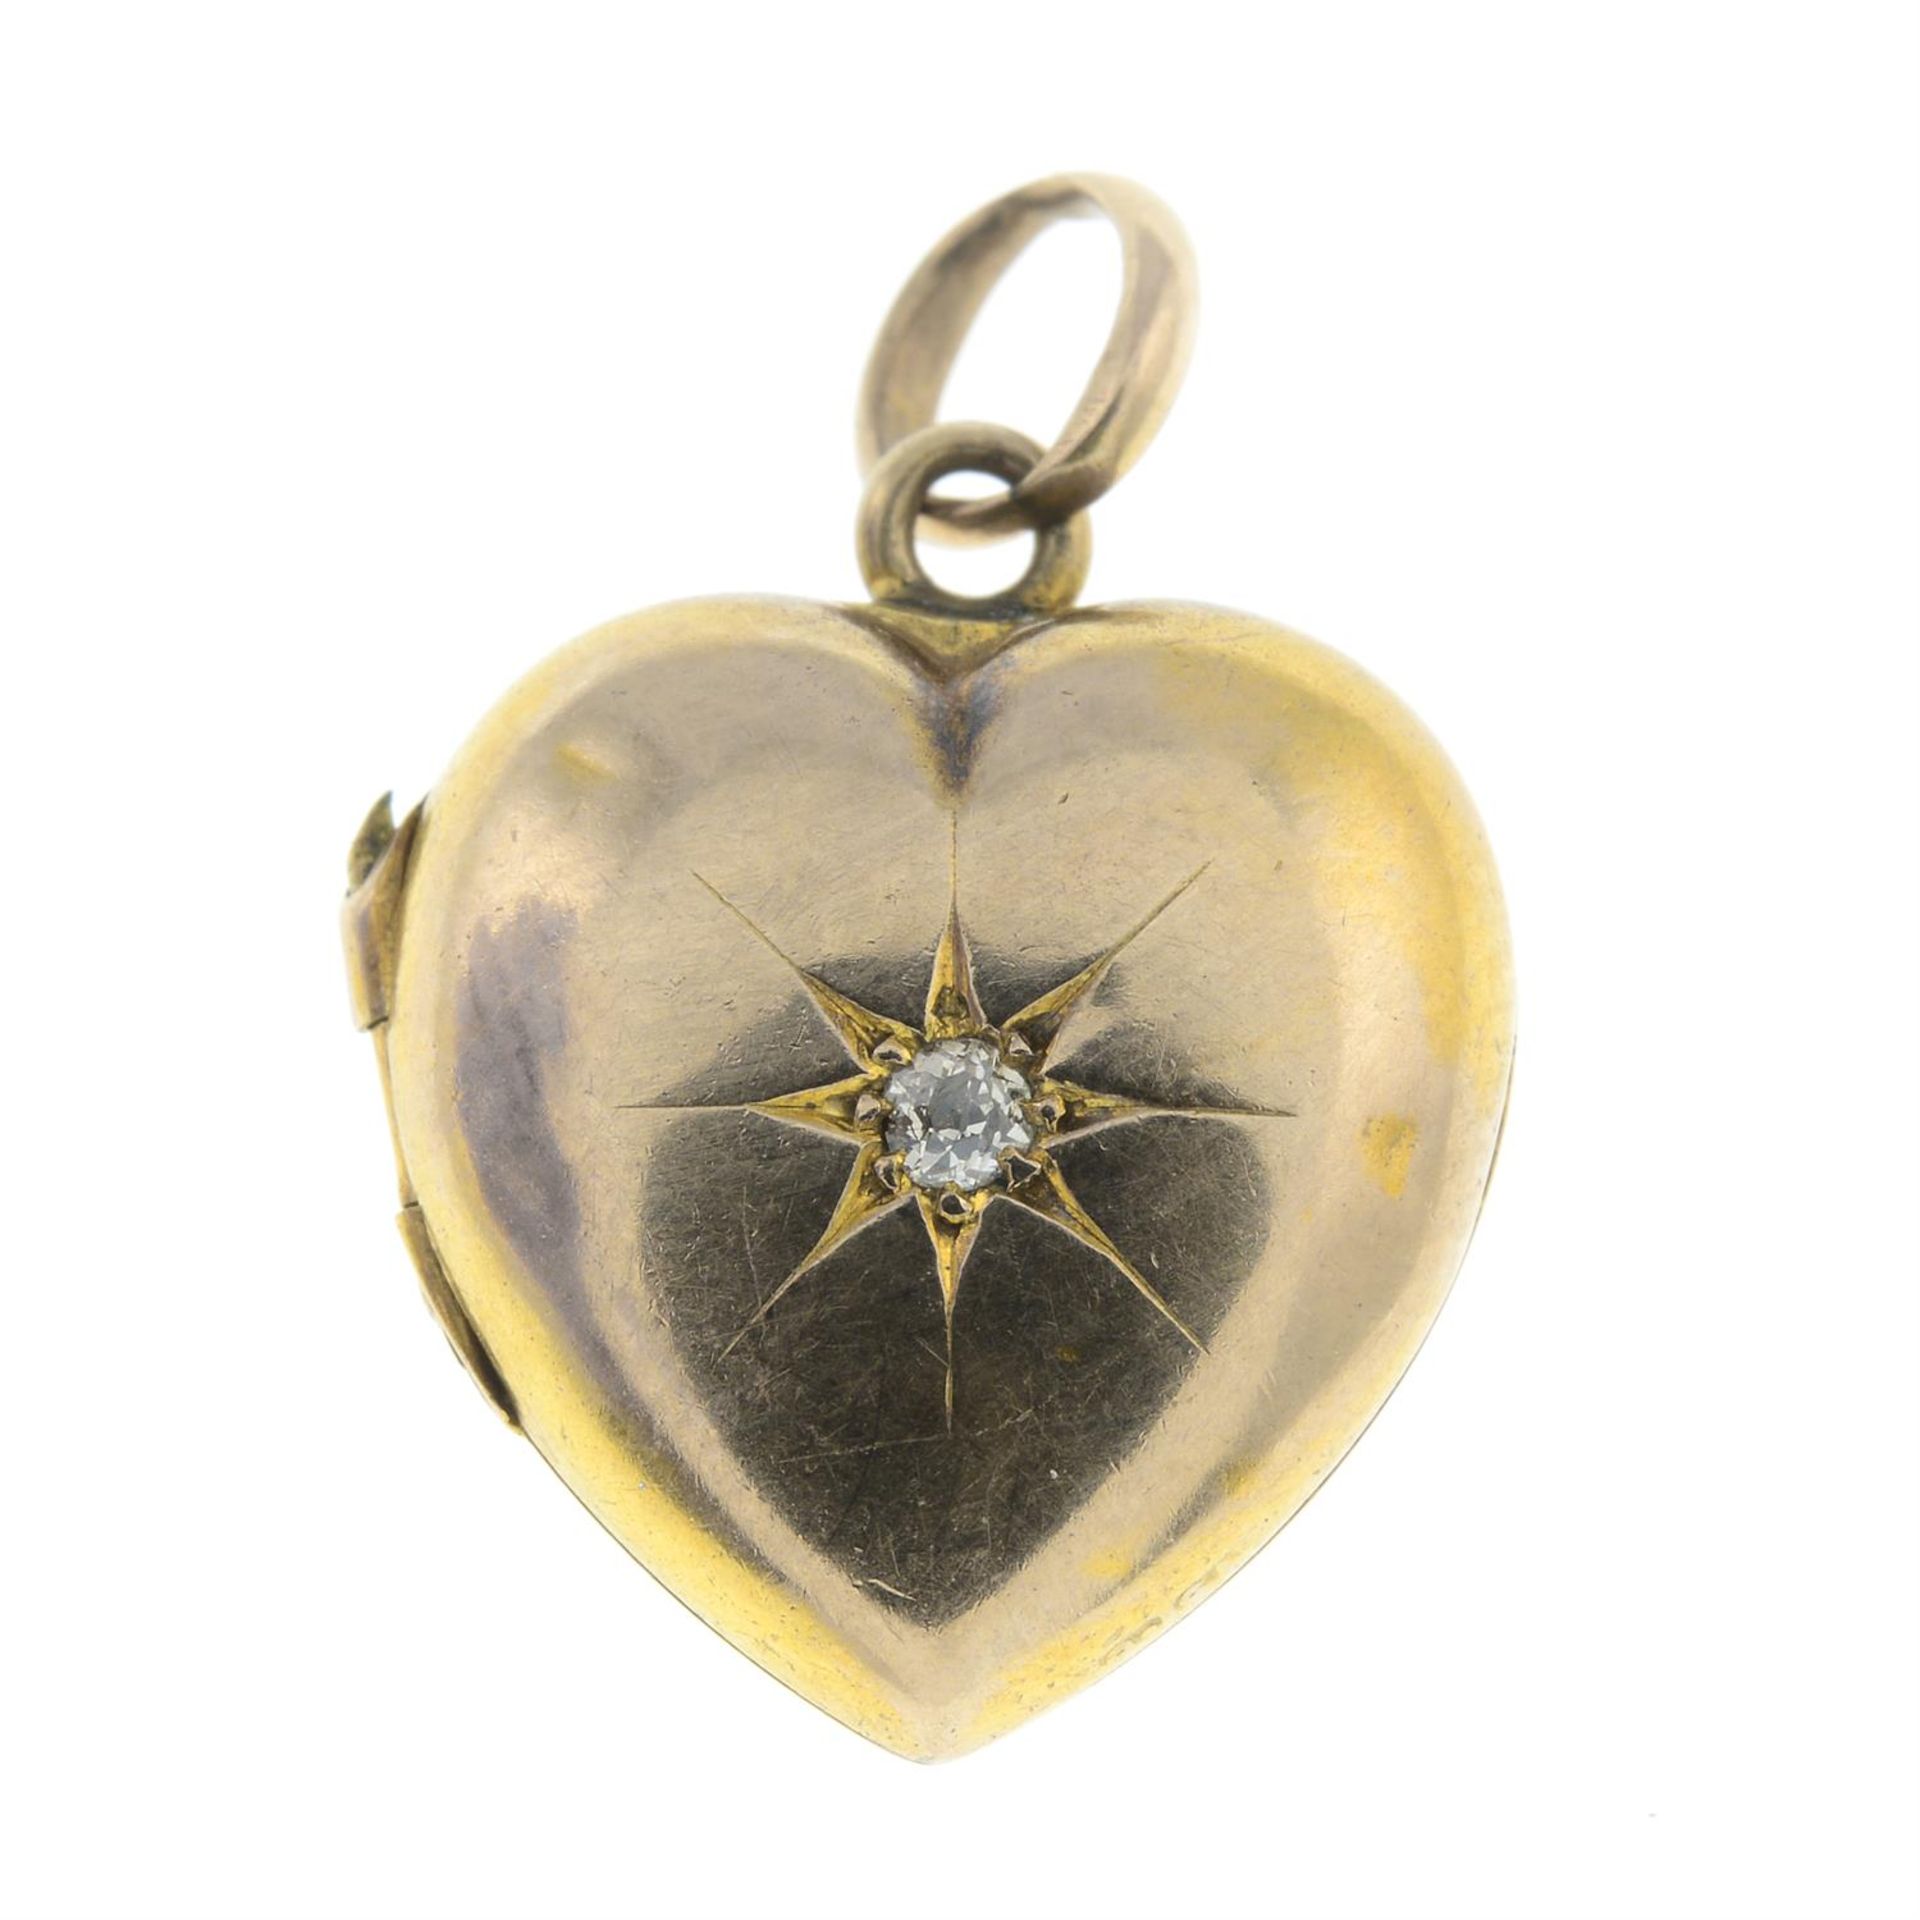 An early 20th century gold old-cut diamond heart-shaped locket charm/pendant.